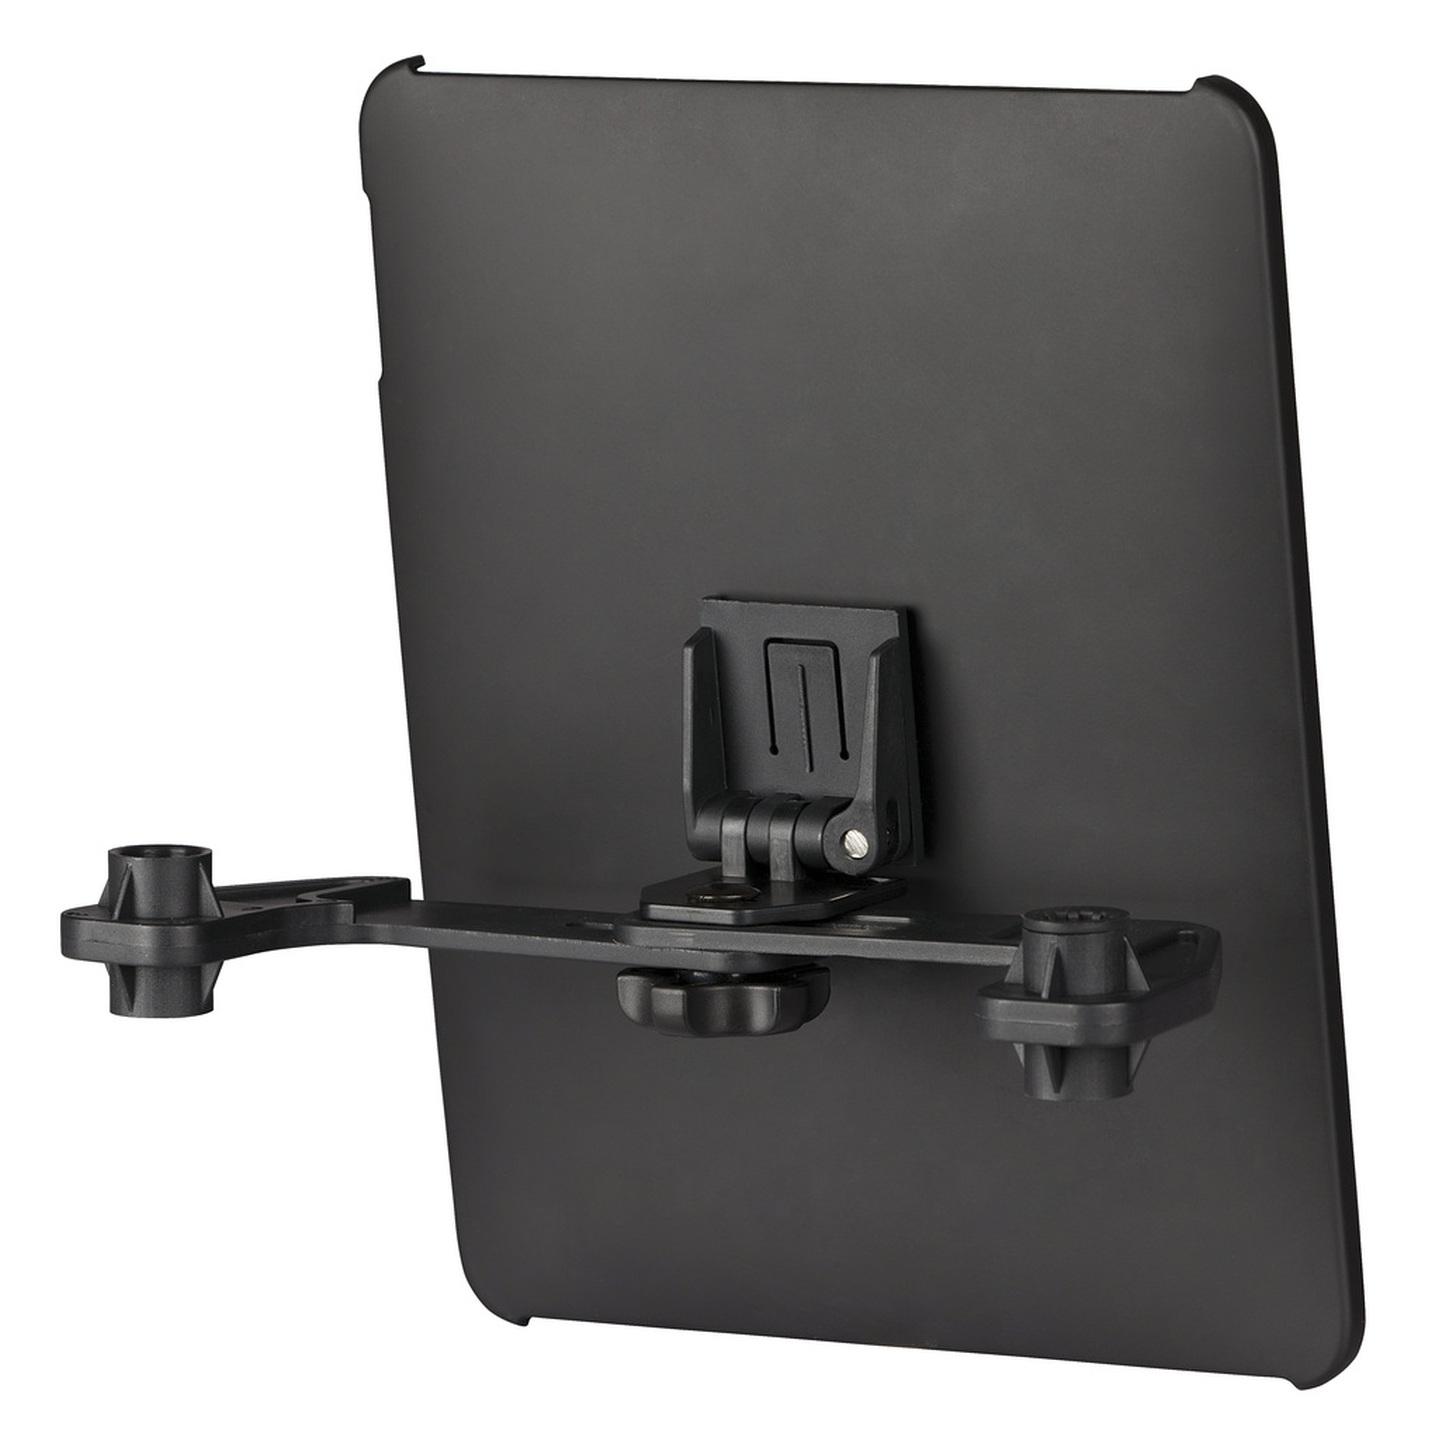 iPad Headrest Mounting Bracket